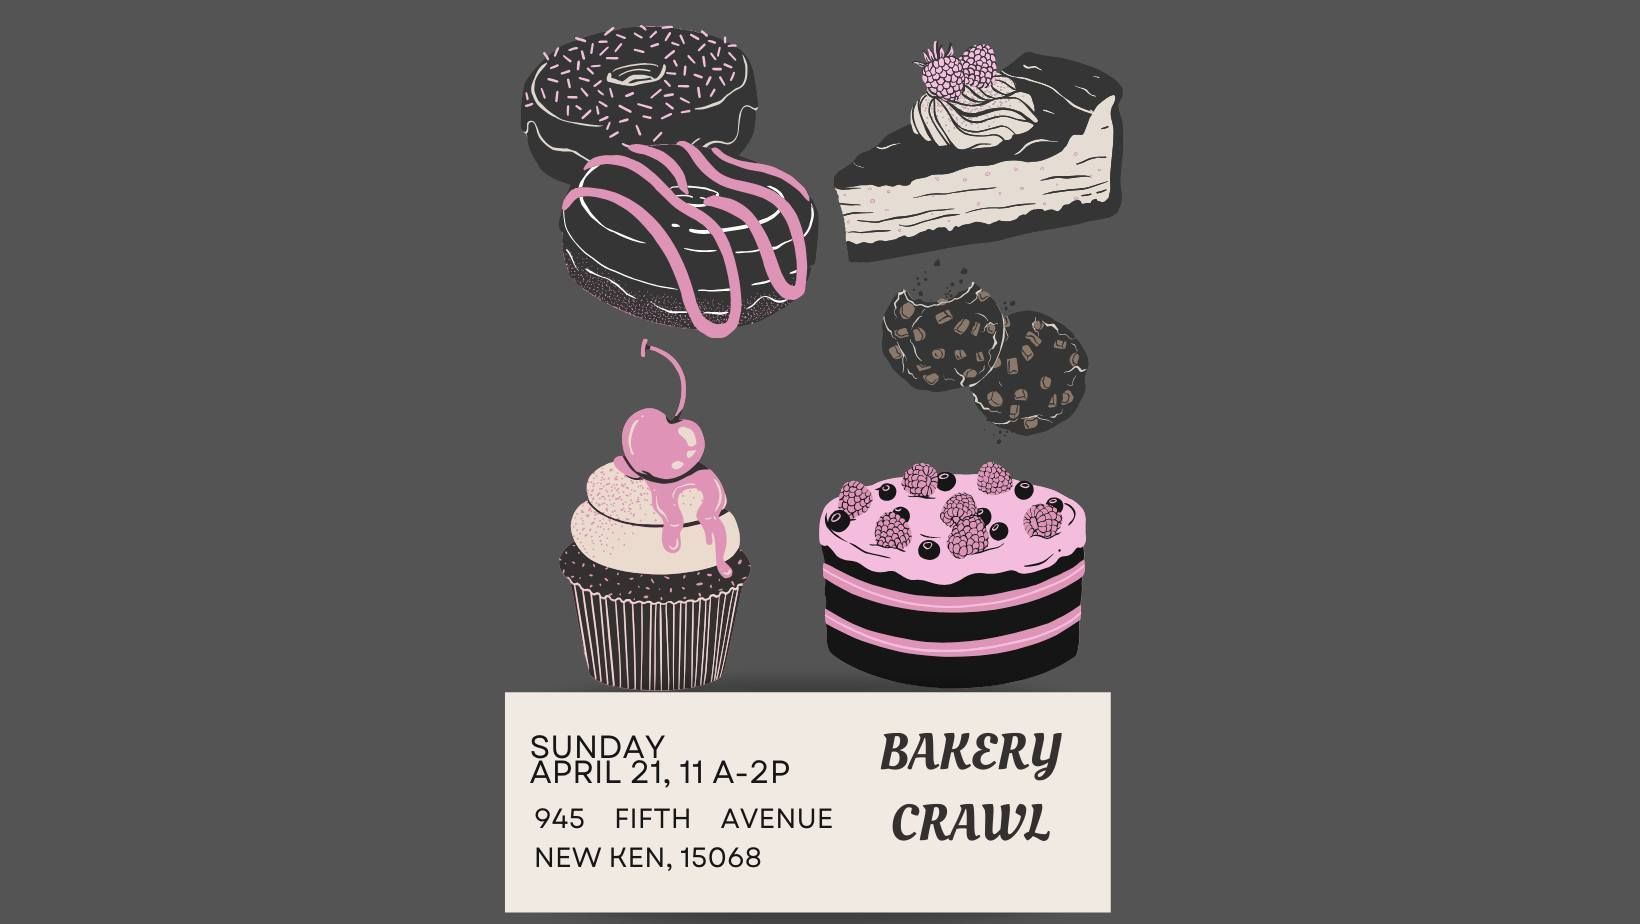 Bakery Crawl - April 21